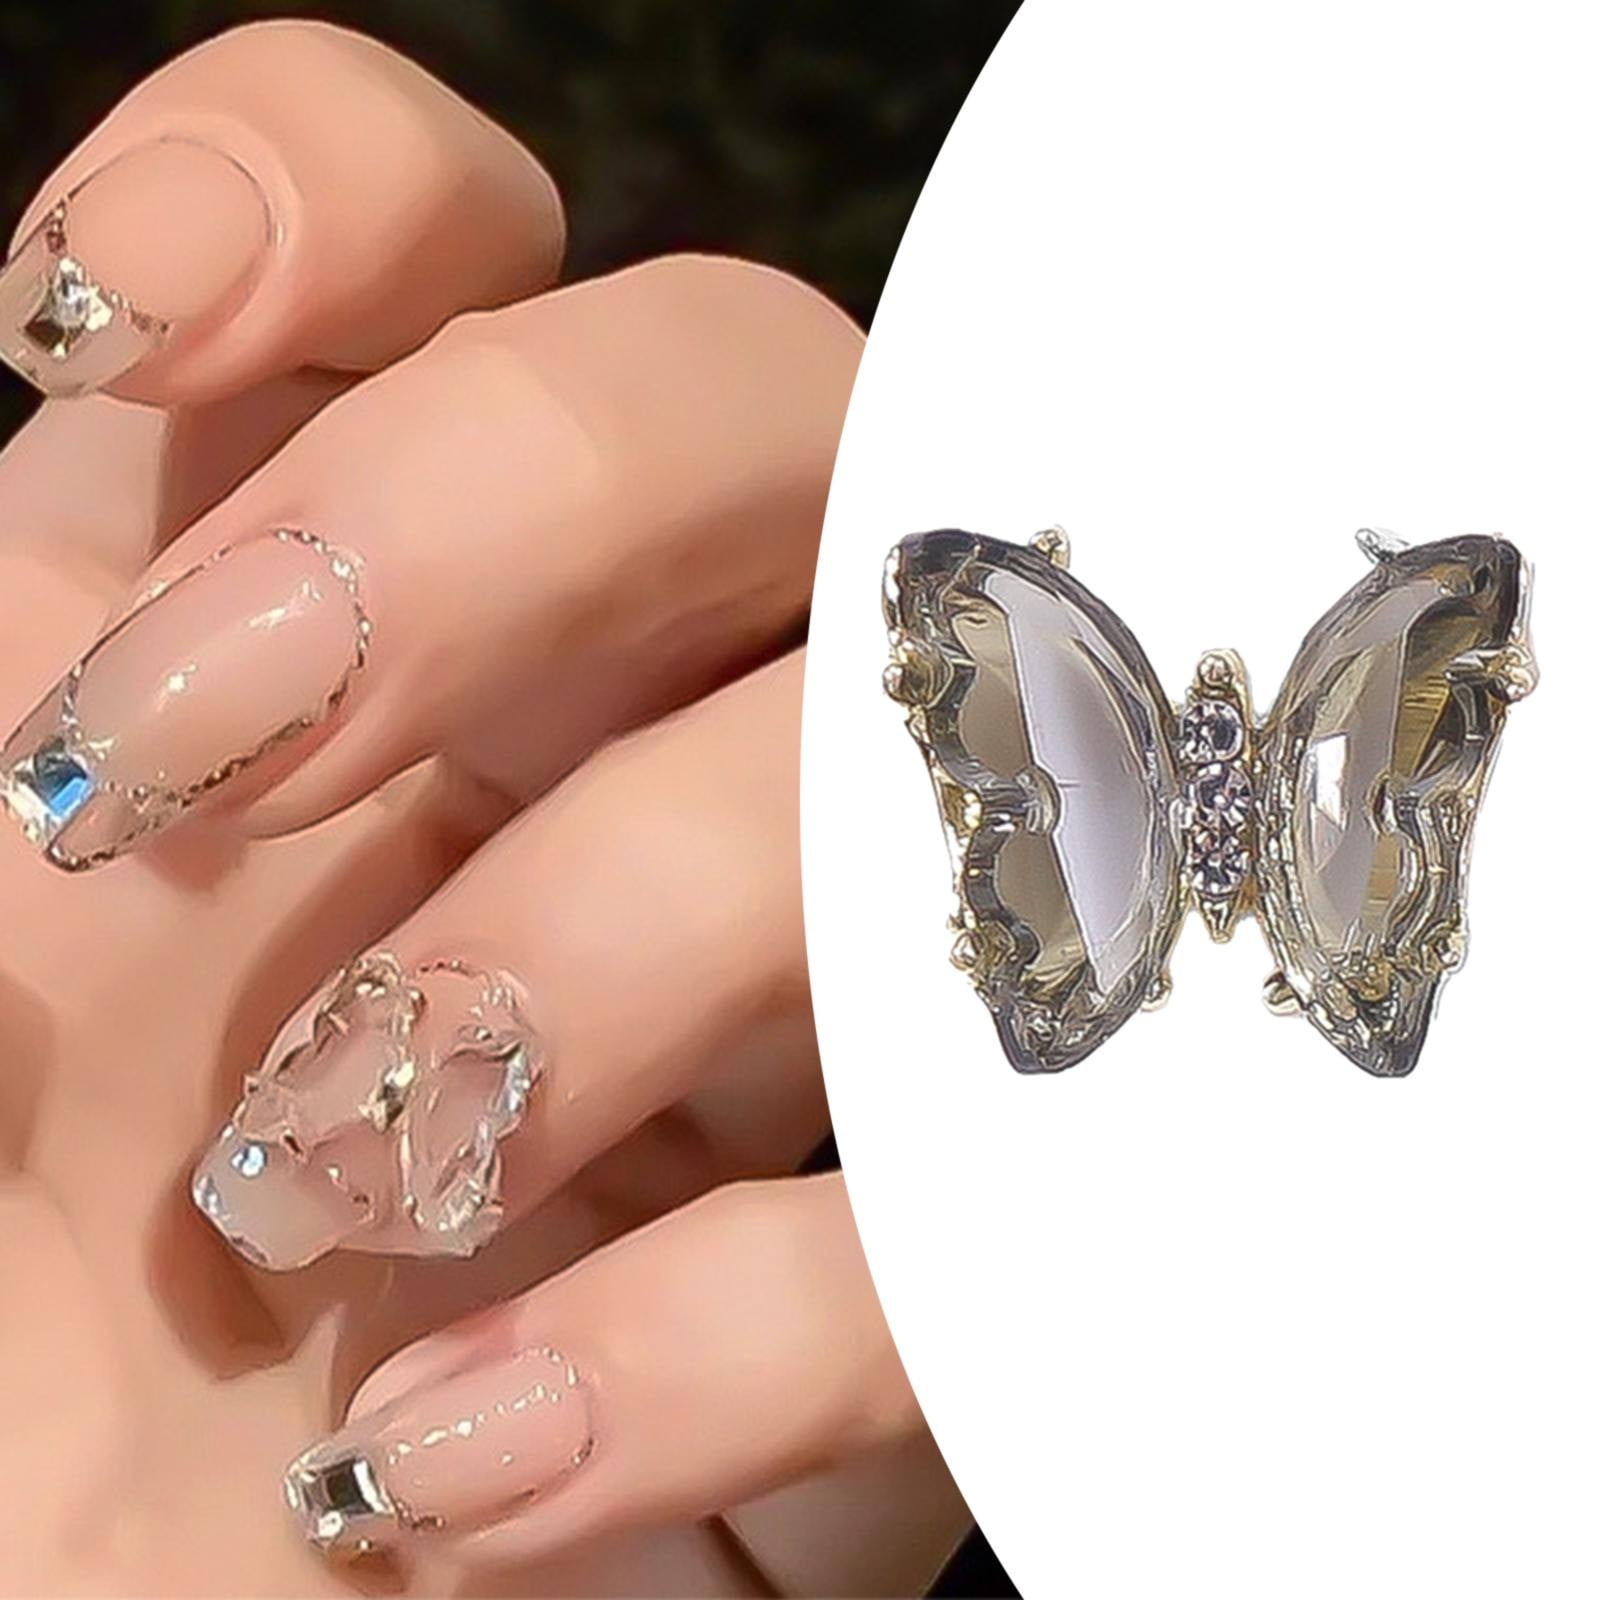 Nail Art Bow Jewelry 3D Shiny Crystal Accessories DIY Nail Art Supplies  Decor | eBay